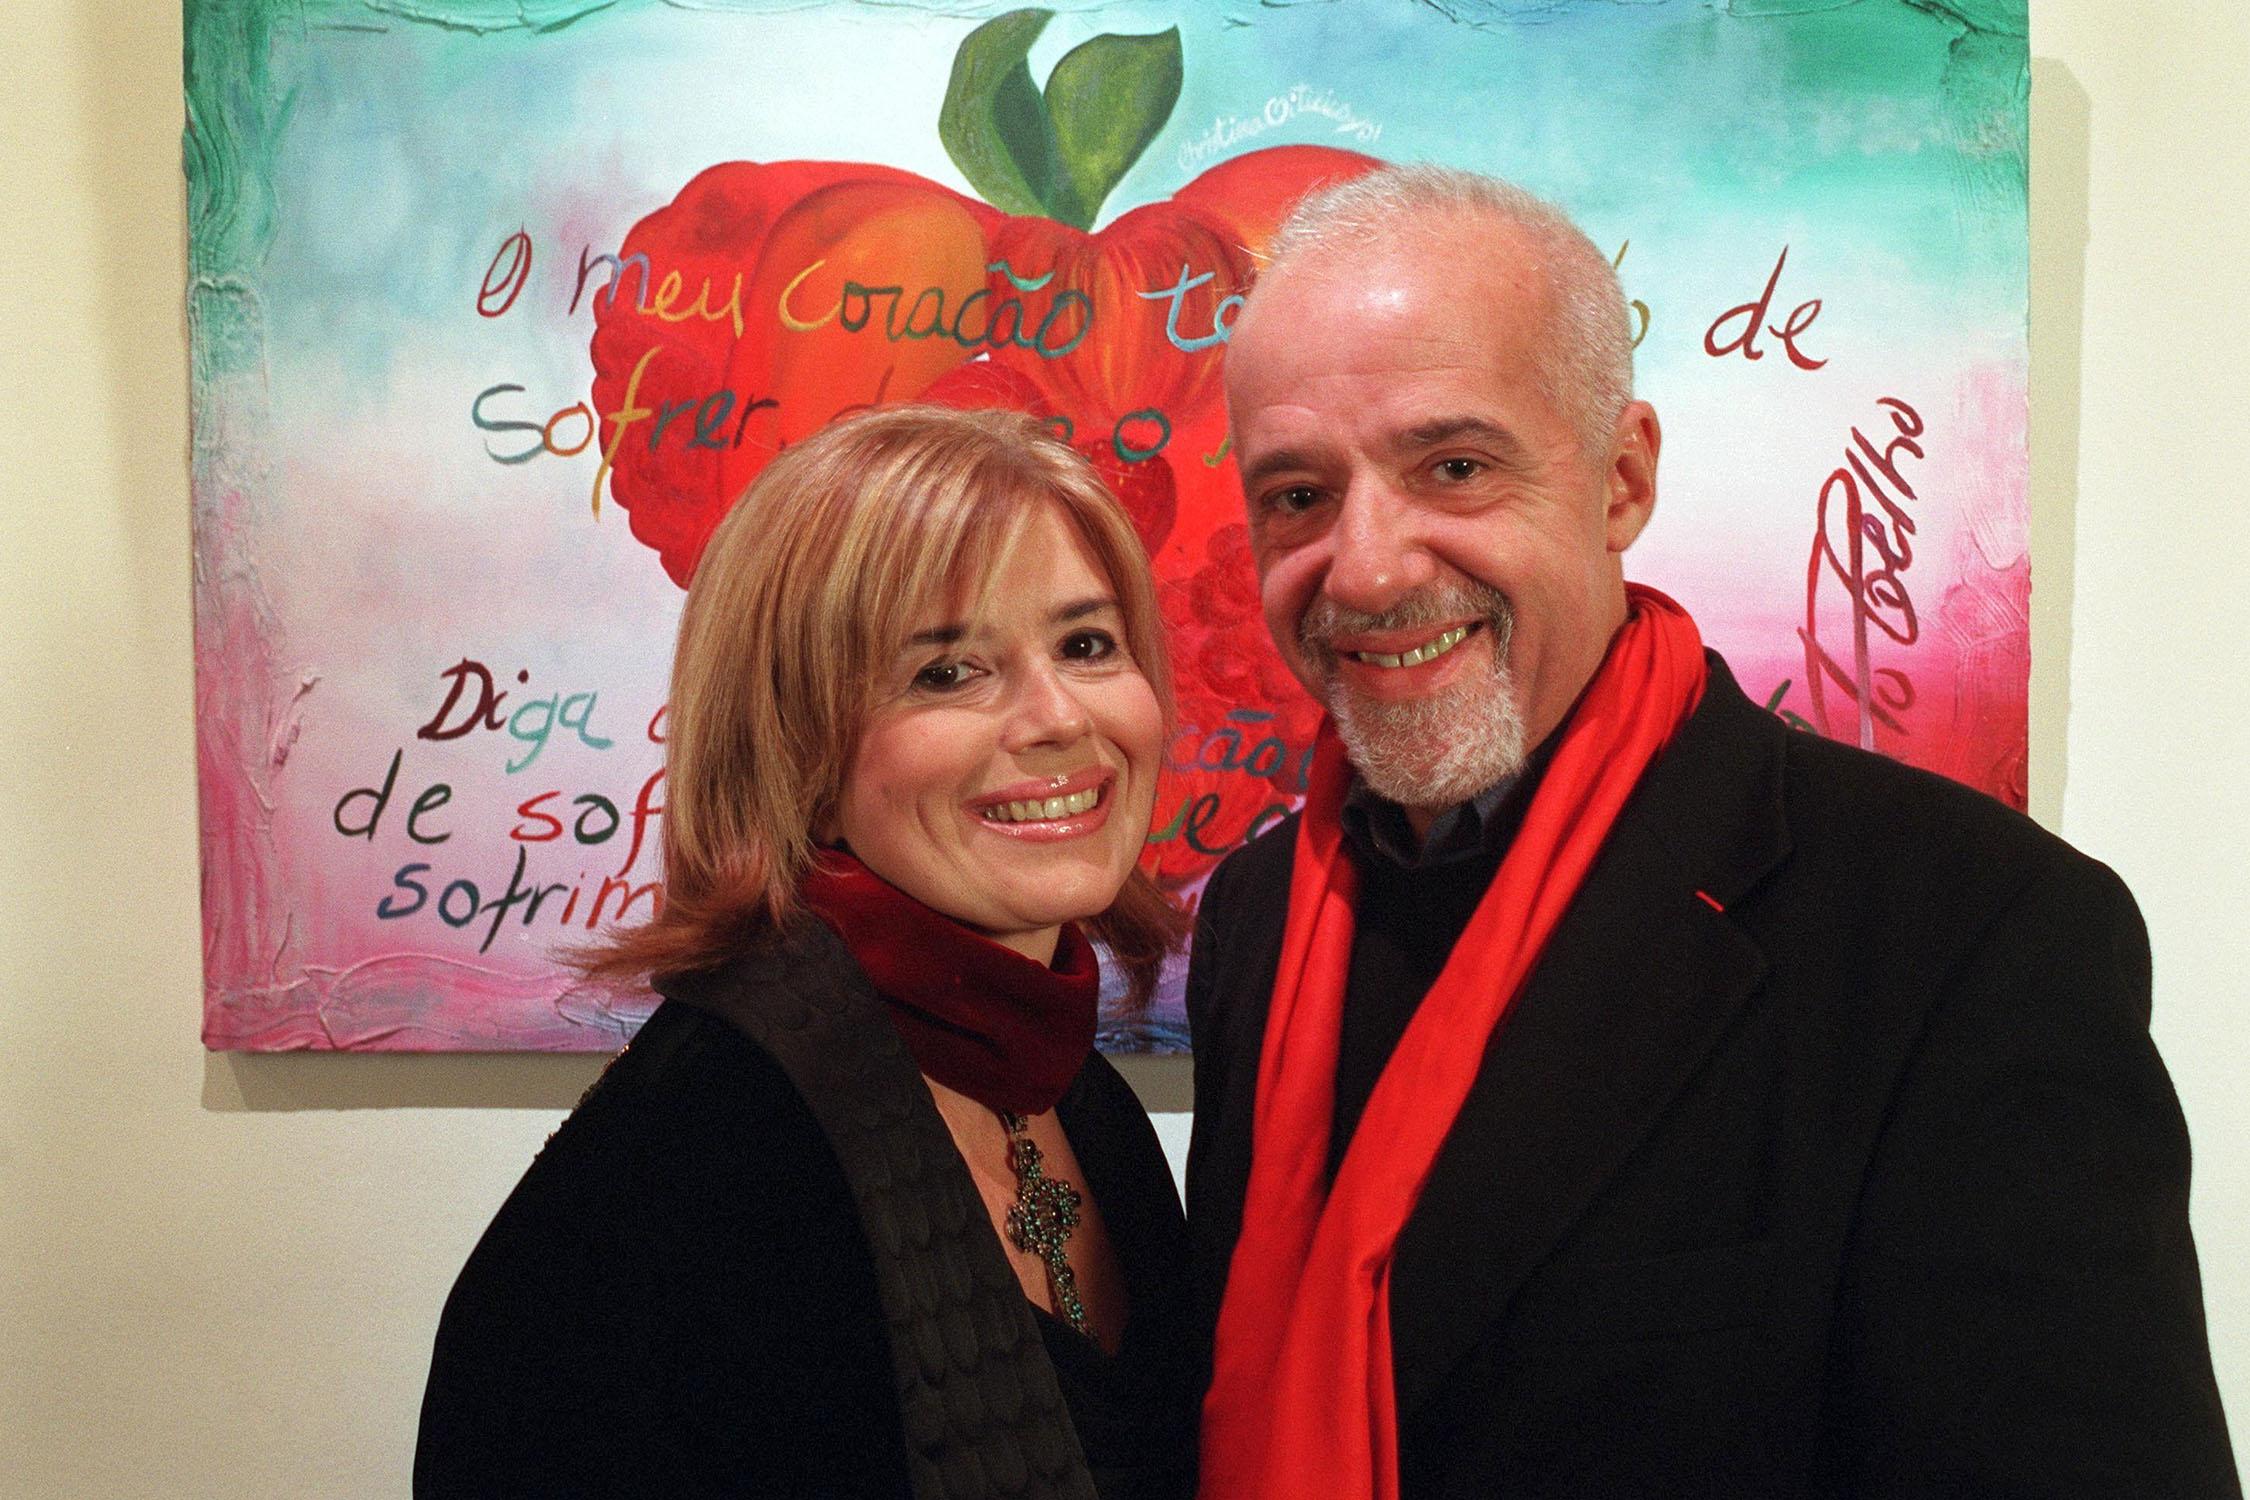 Paulo Coelho with wife Christina Oticica